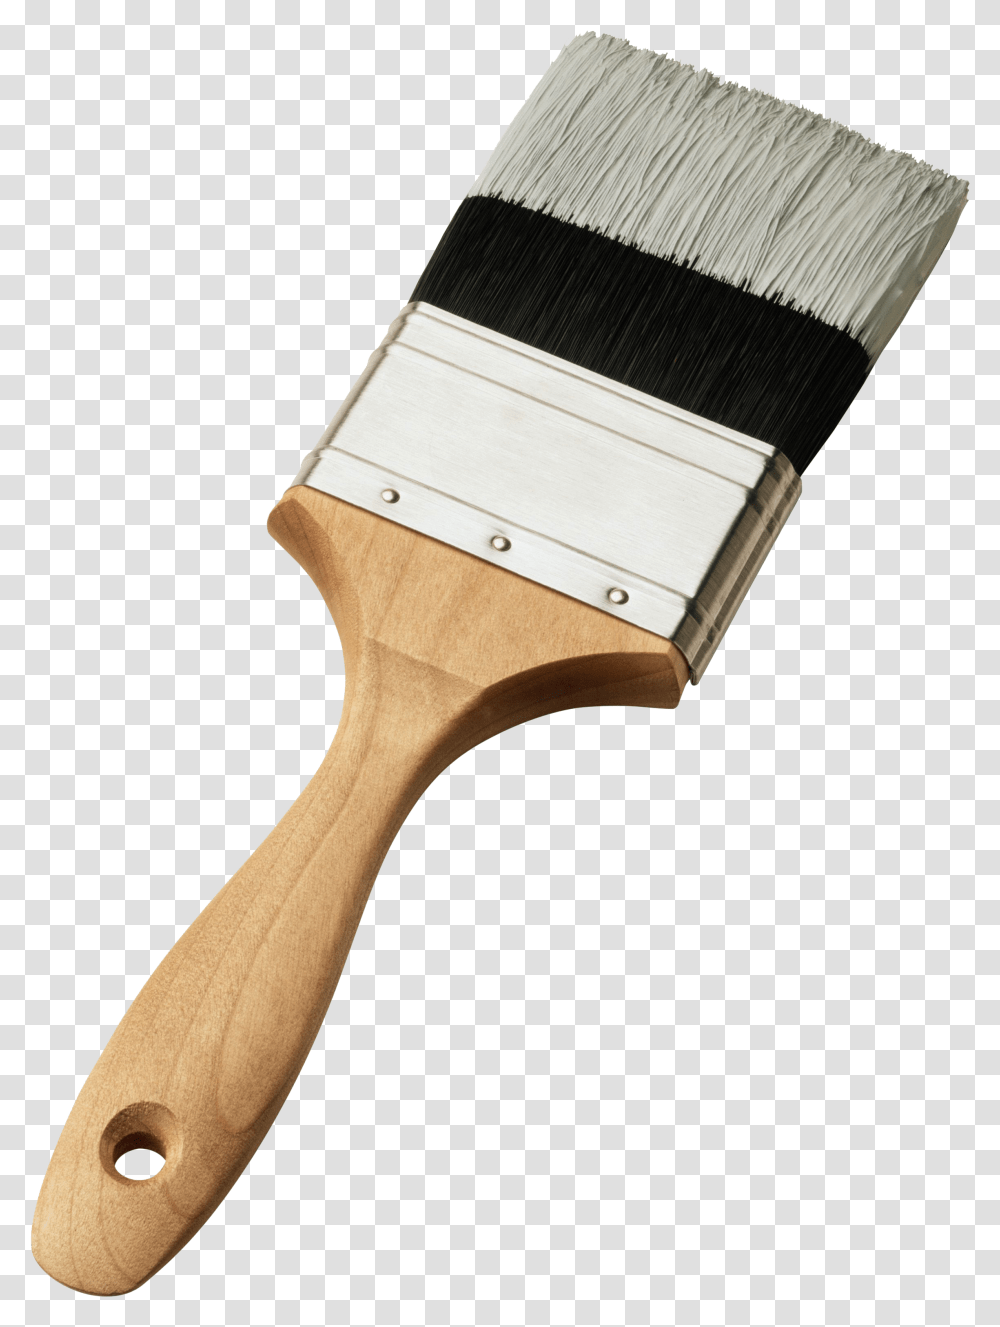 Paint Brush Image Paint Brush, Tool, Hammer, Toothbrush Transparent Png